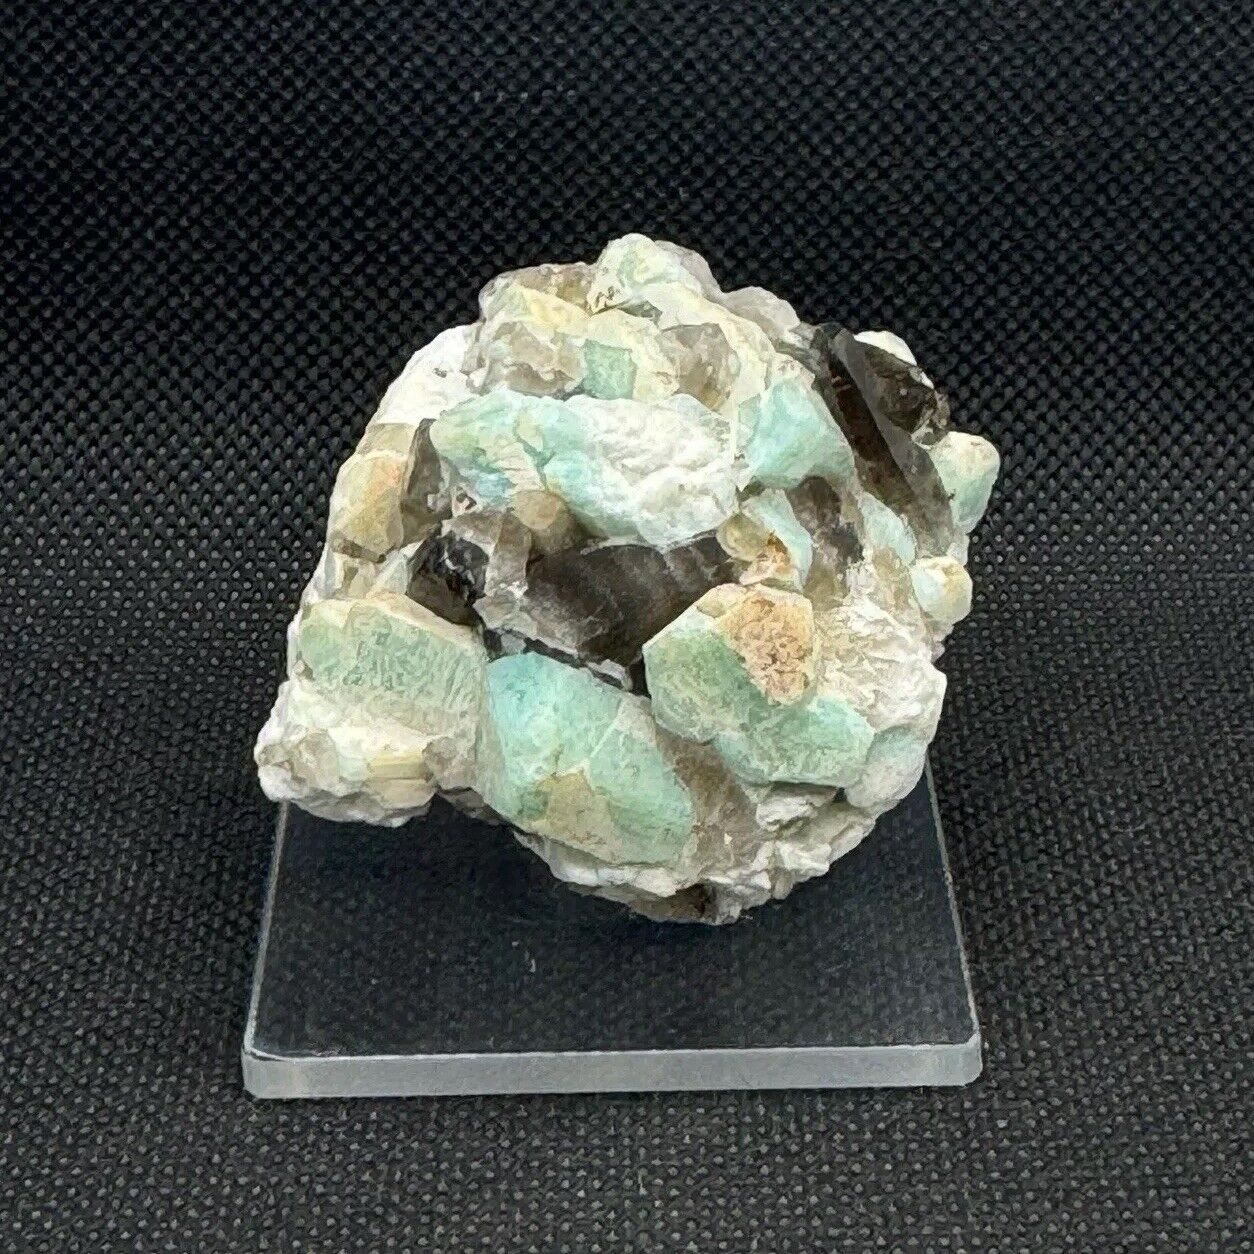 Amazonite With Smoky Quartz Crystals Mineral Specimen Colorado - 100G